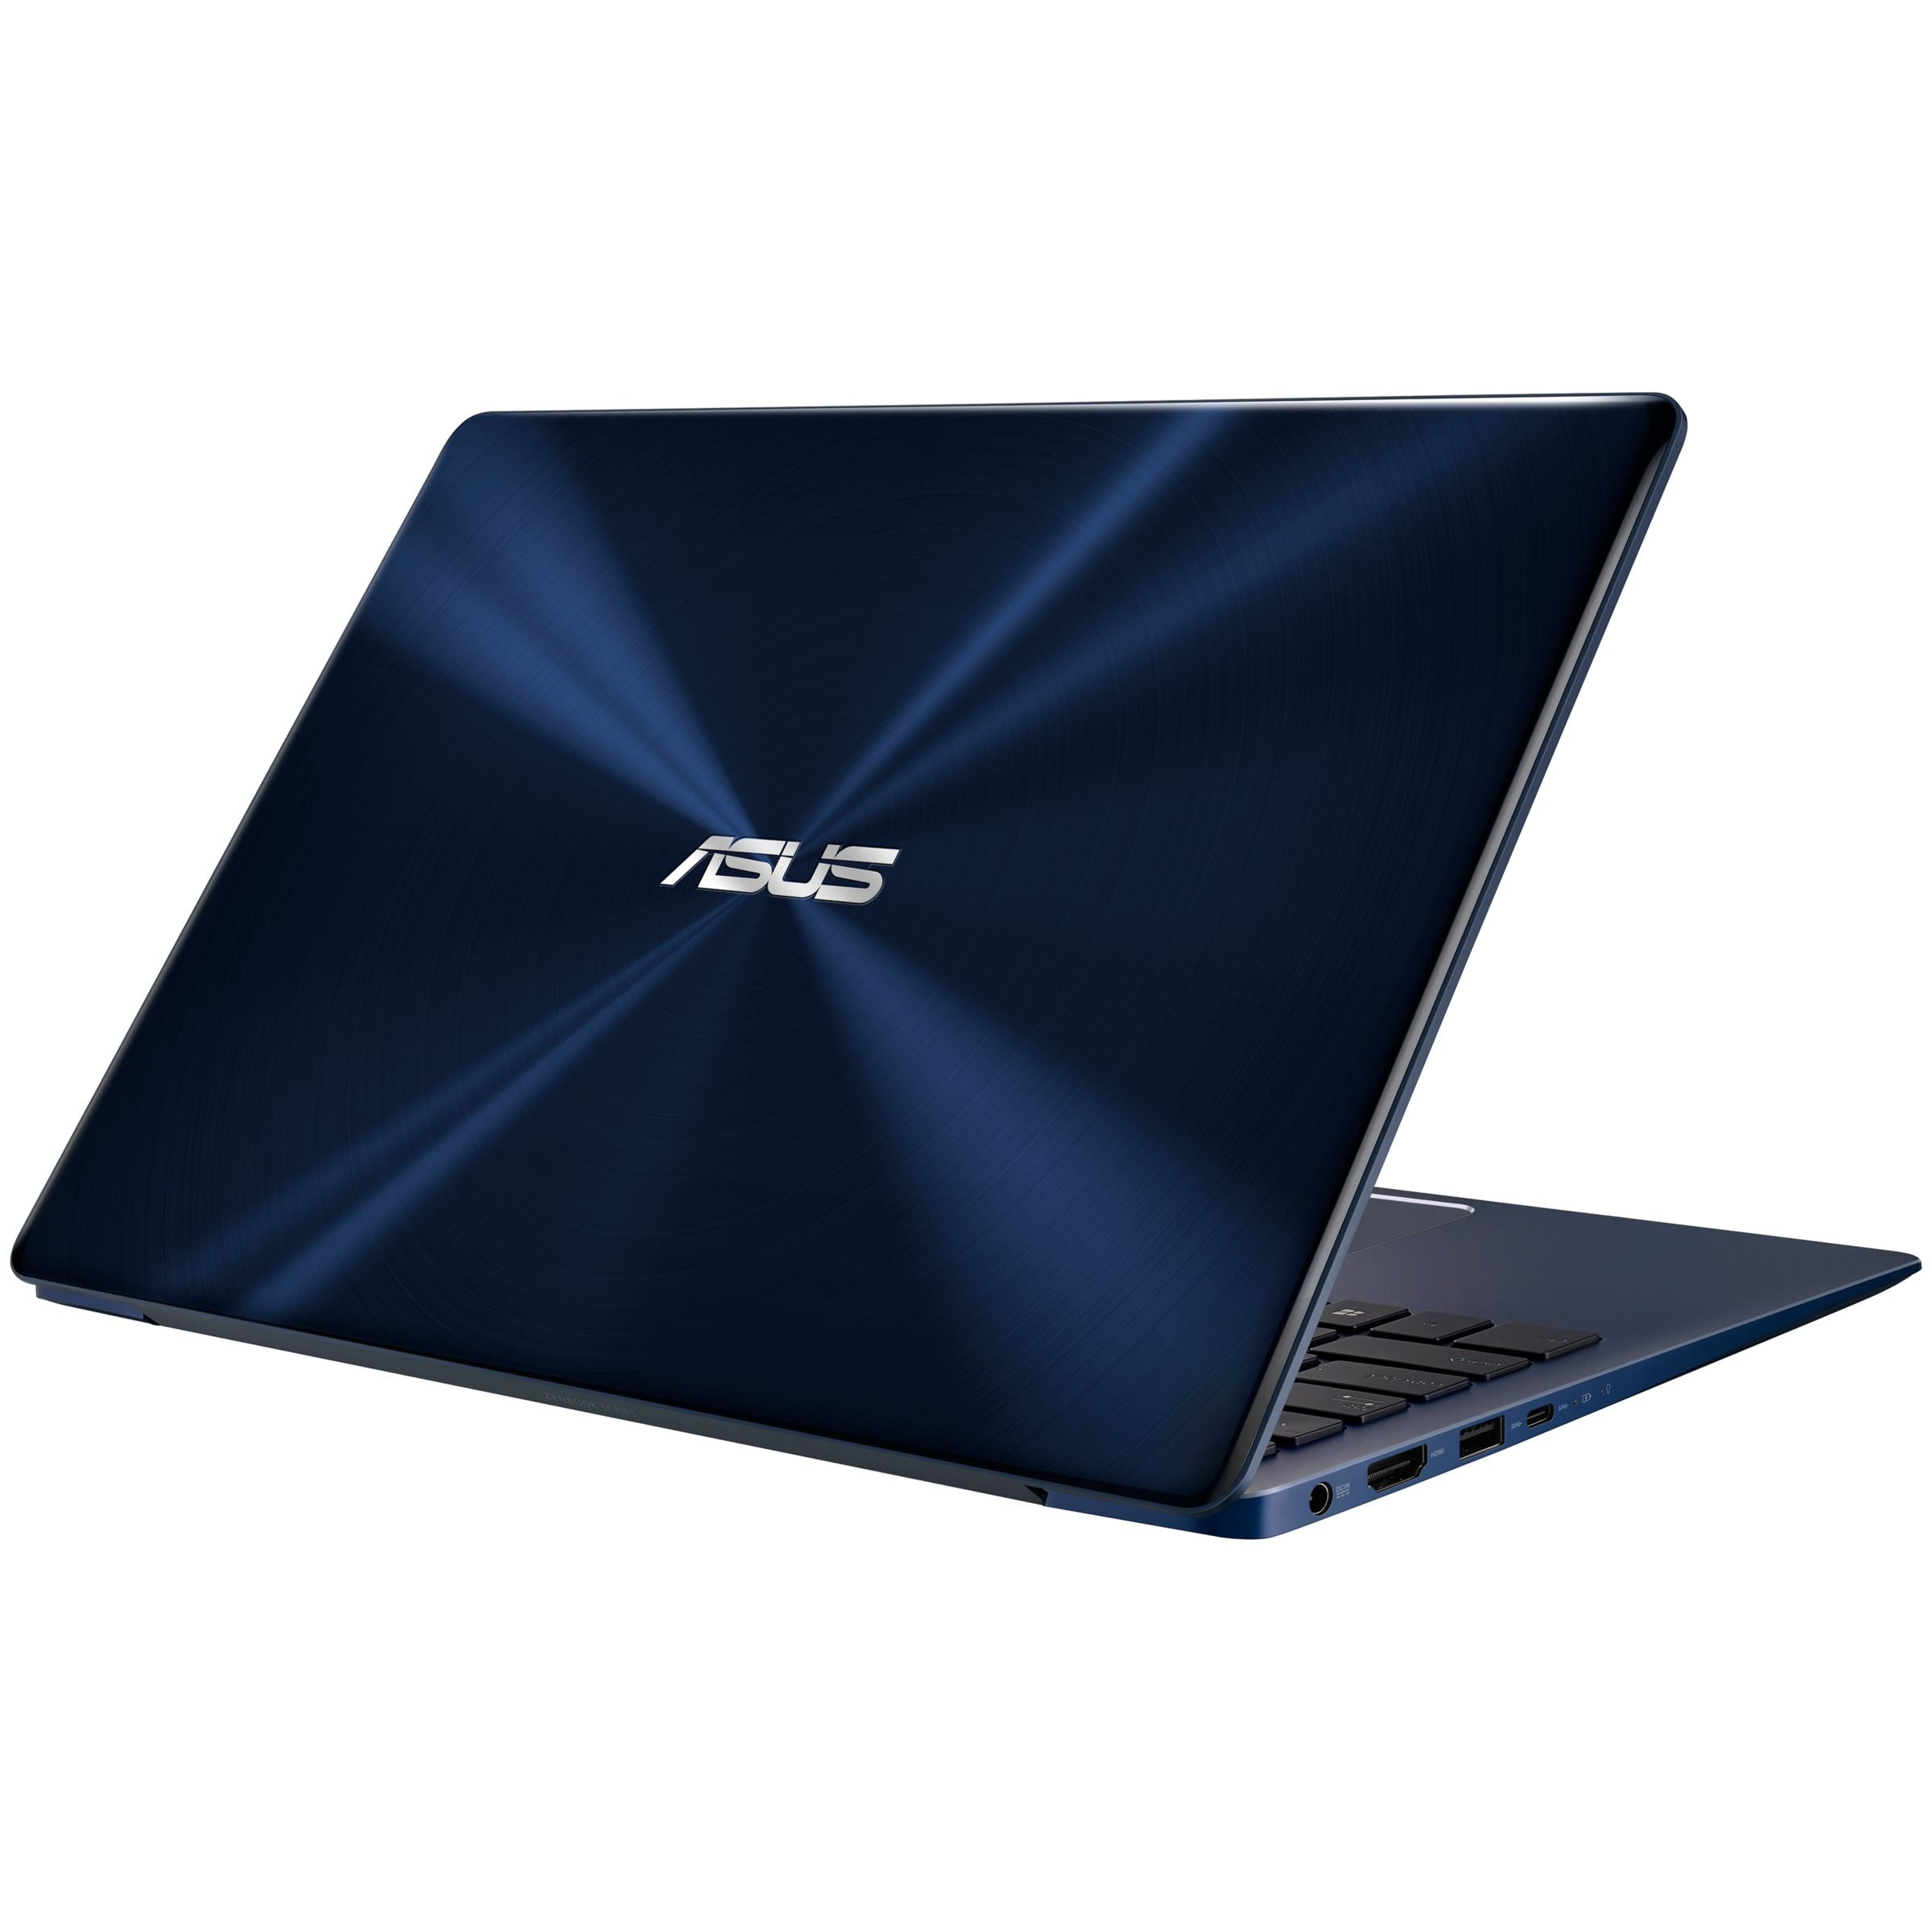 ASUS Zenbook UX331UN-EG009T 13.3" Laptop, Intel Core i5, 8GB RAM, 256GB SSD, Blue - Refurbished Good